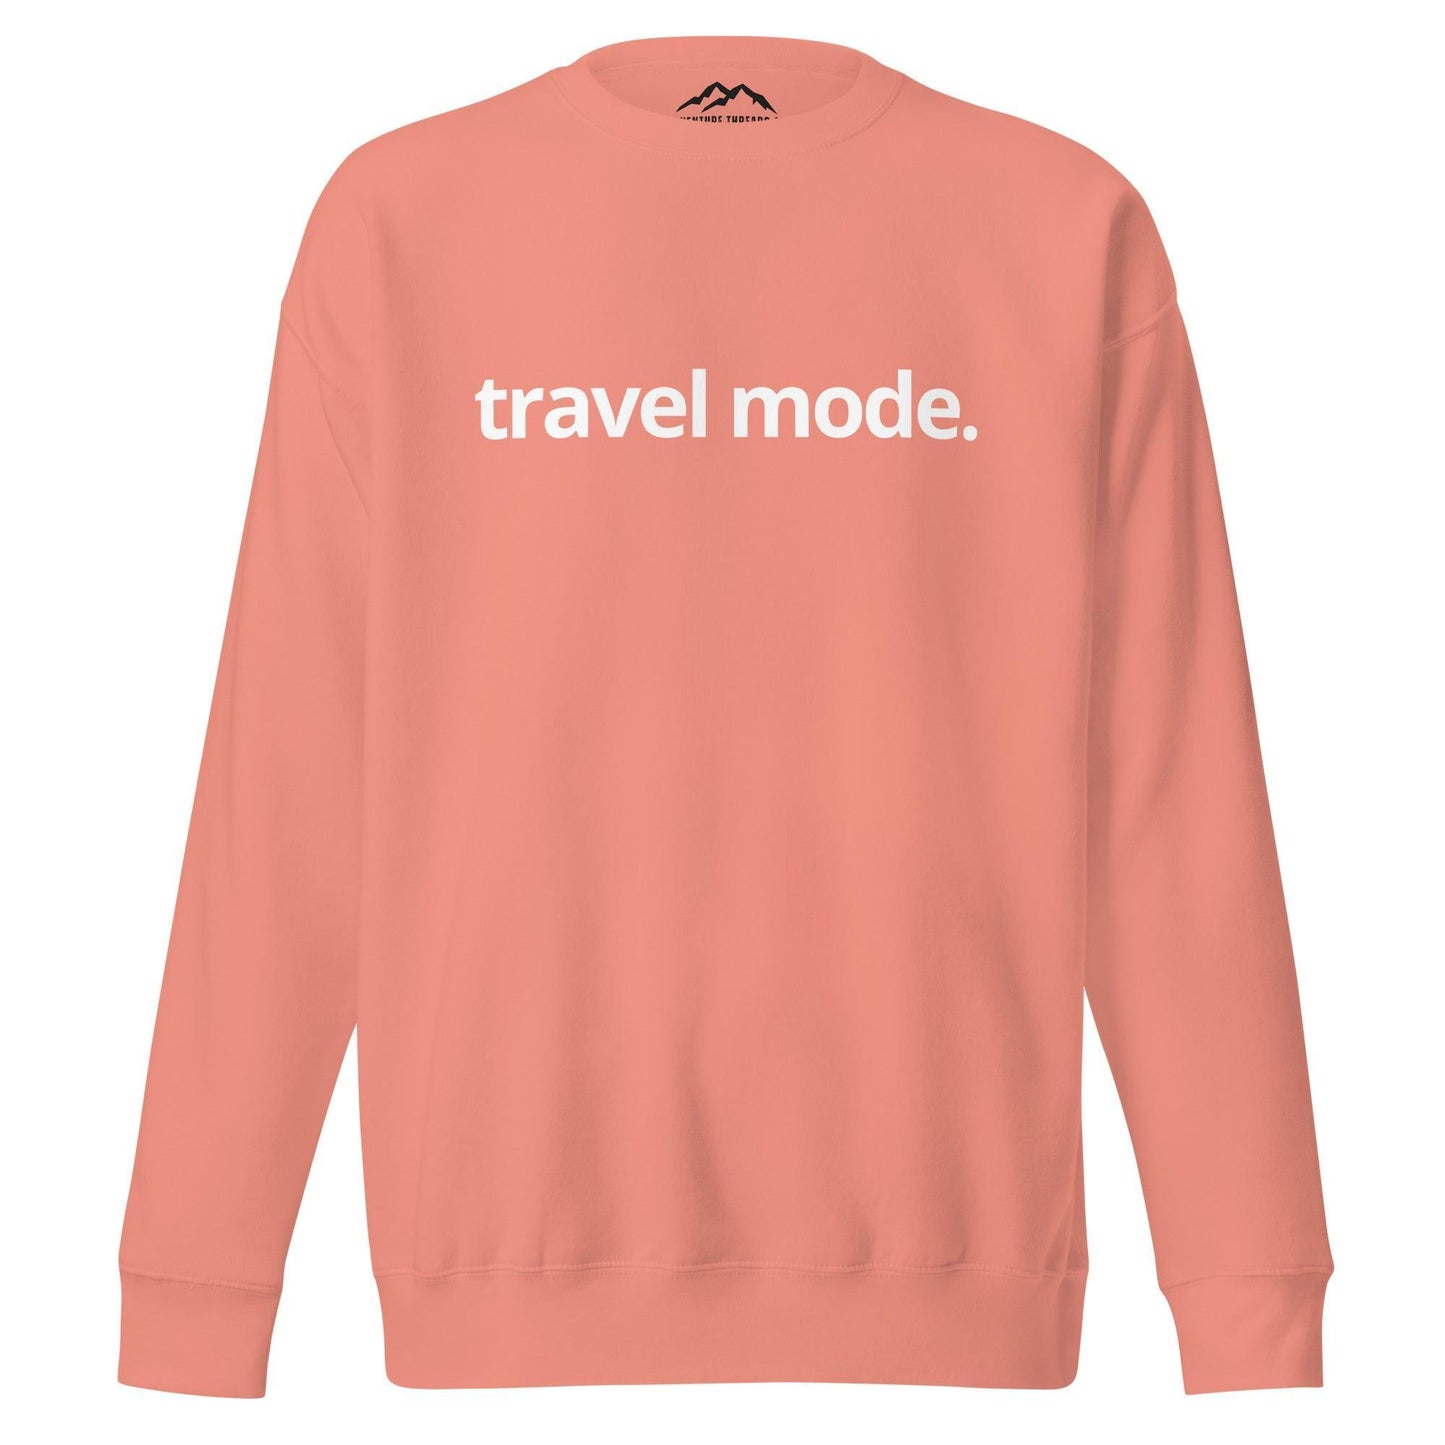 Travel Mode Premium Sweatshirt - Adventure Threads Company